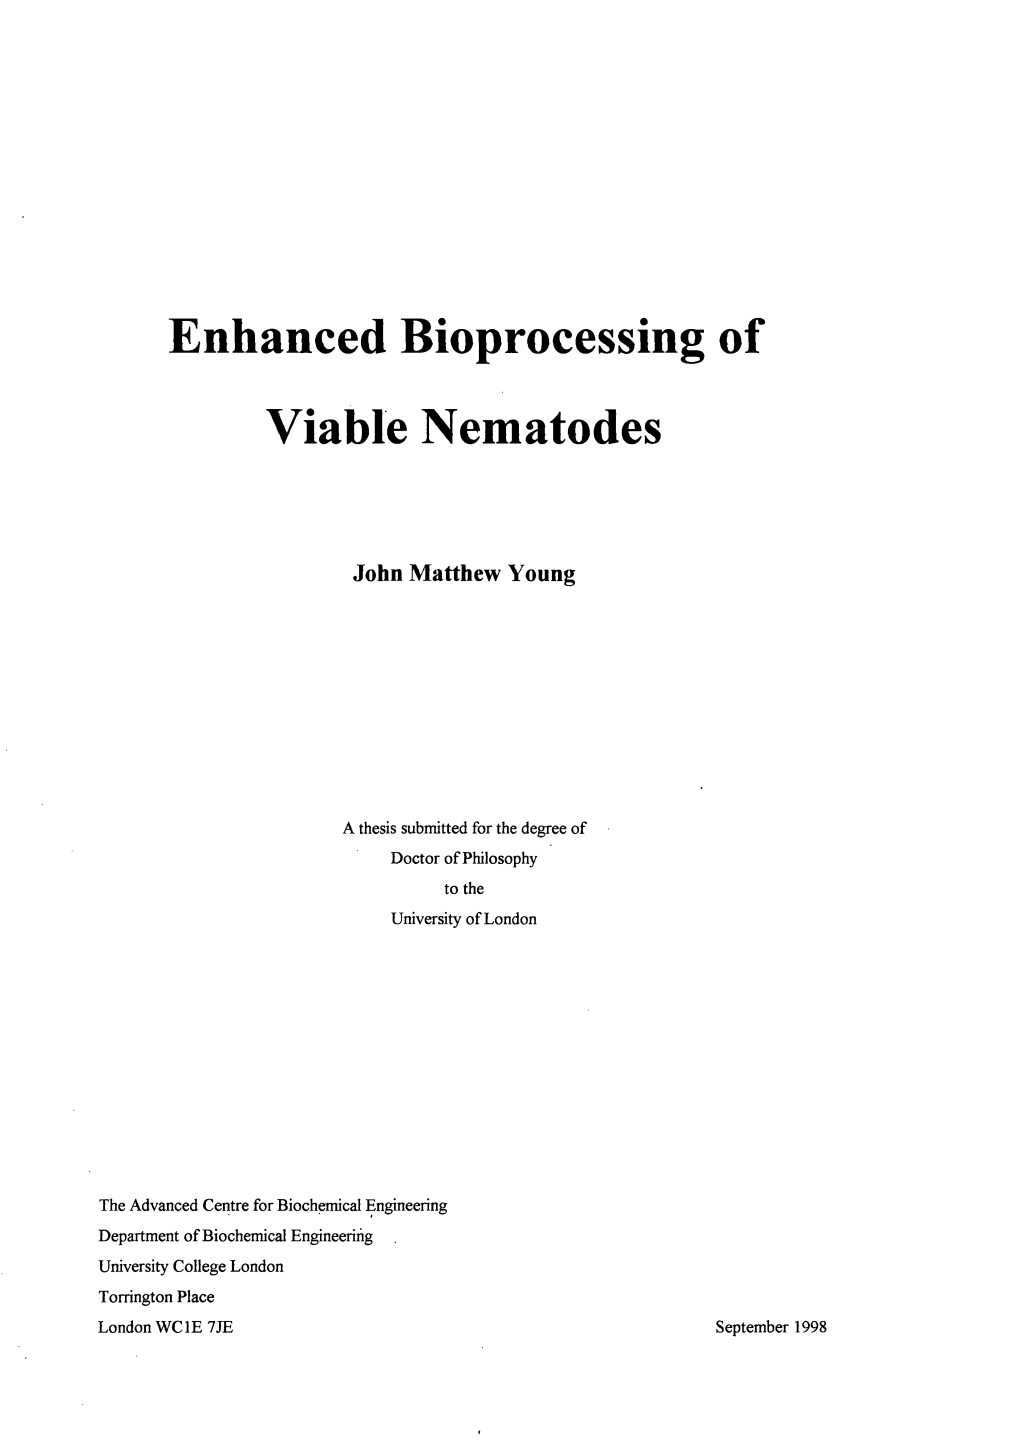 Enhanced Bioprocessing of Viable Nematodes